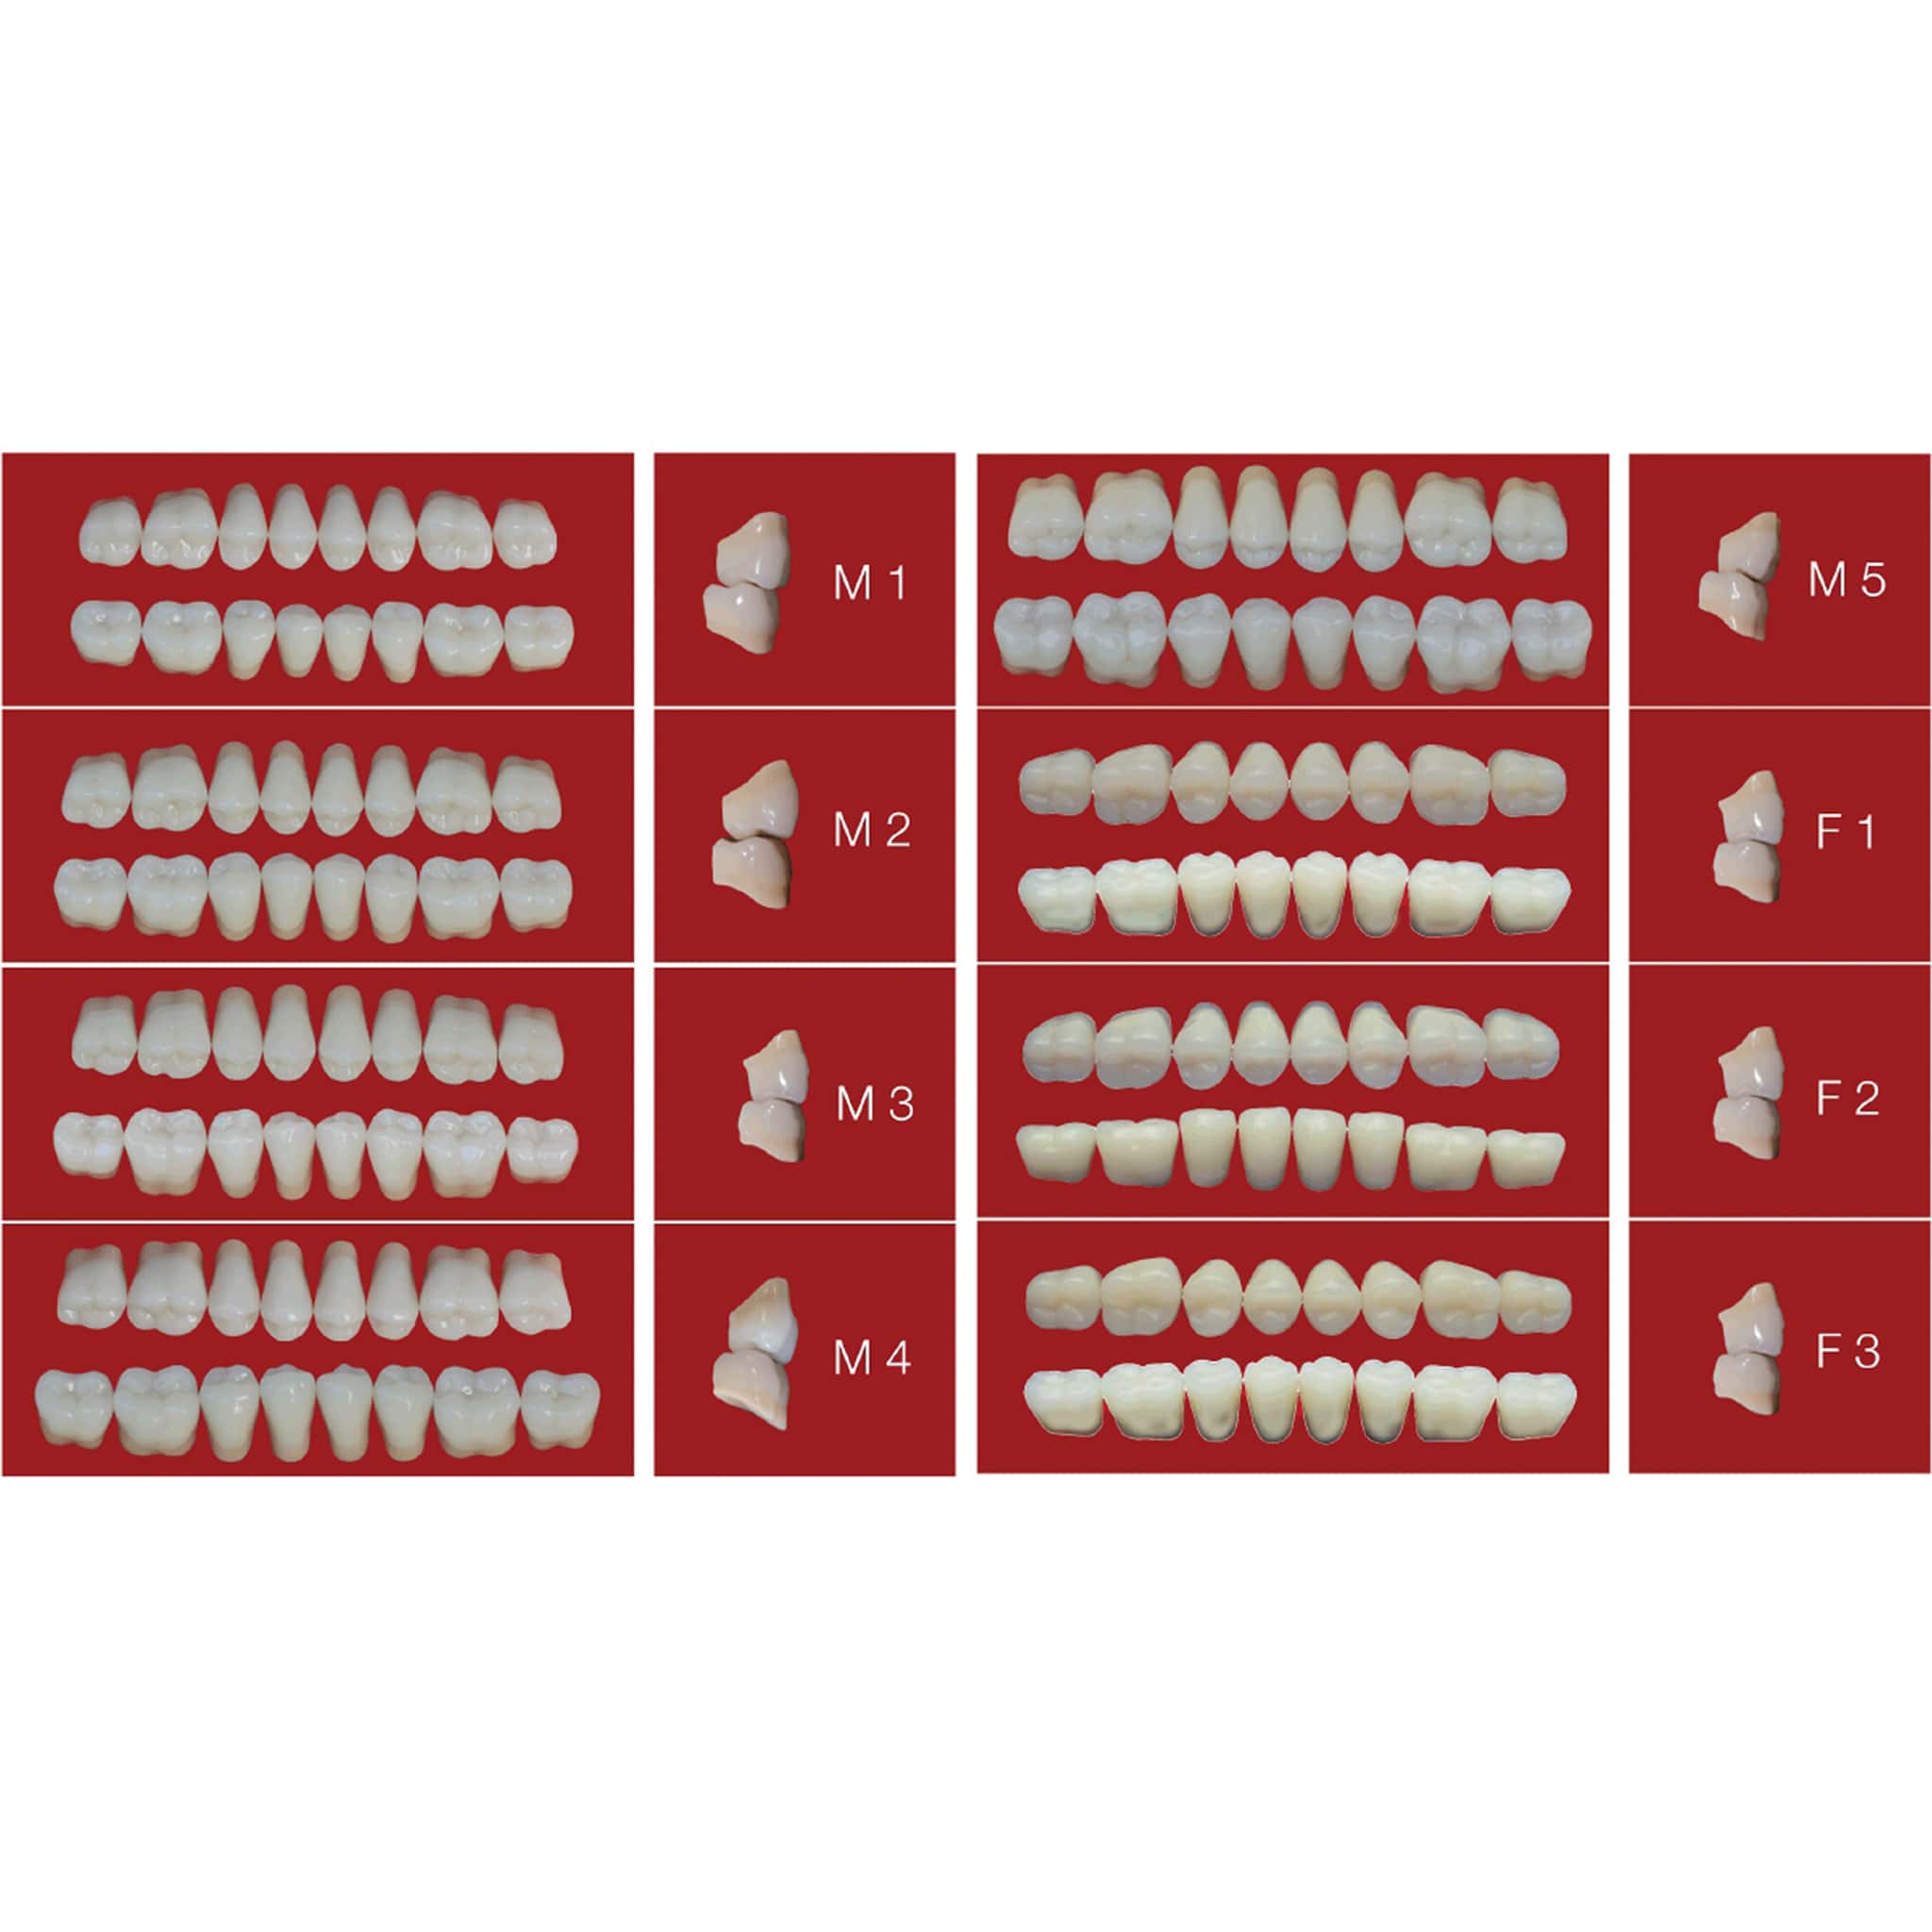 MR Dental Medi-Lux Full Set C3 Shade (Box of 4)